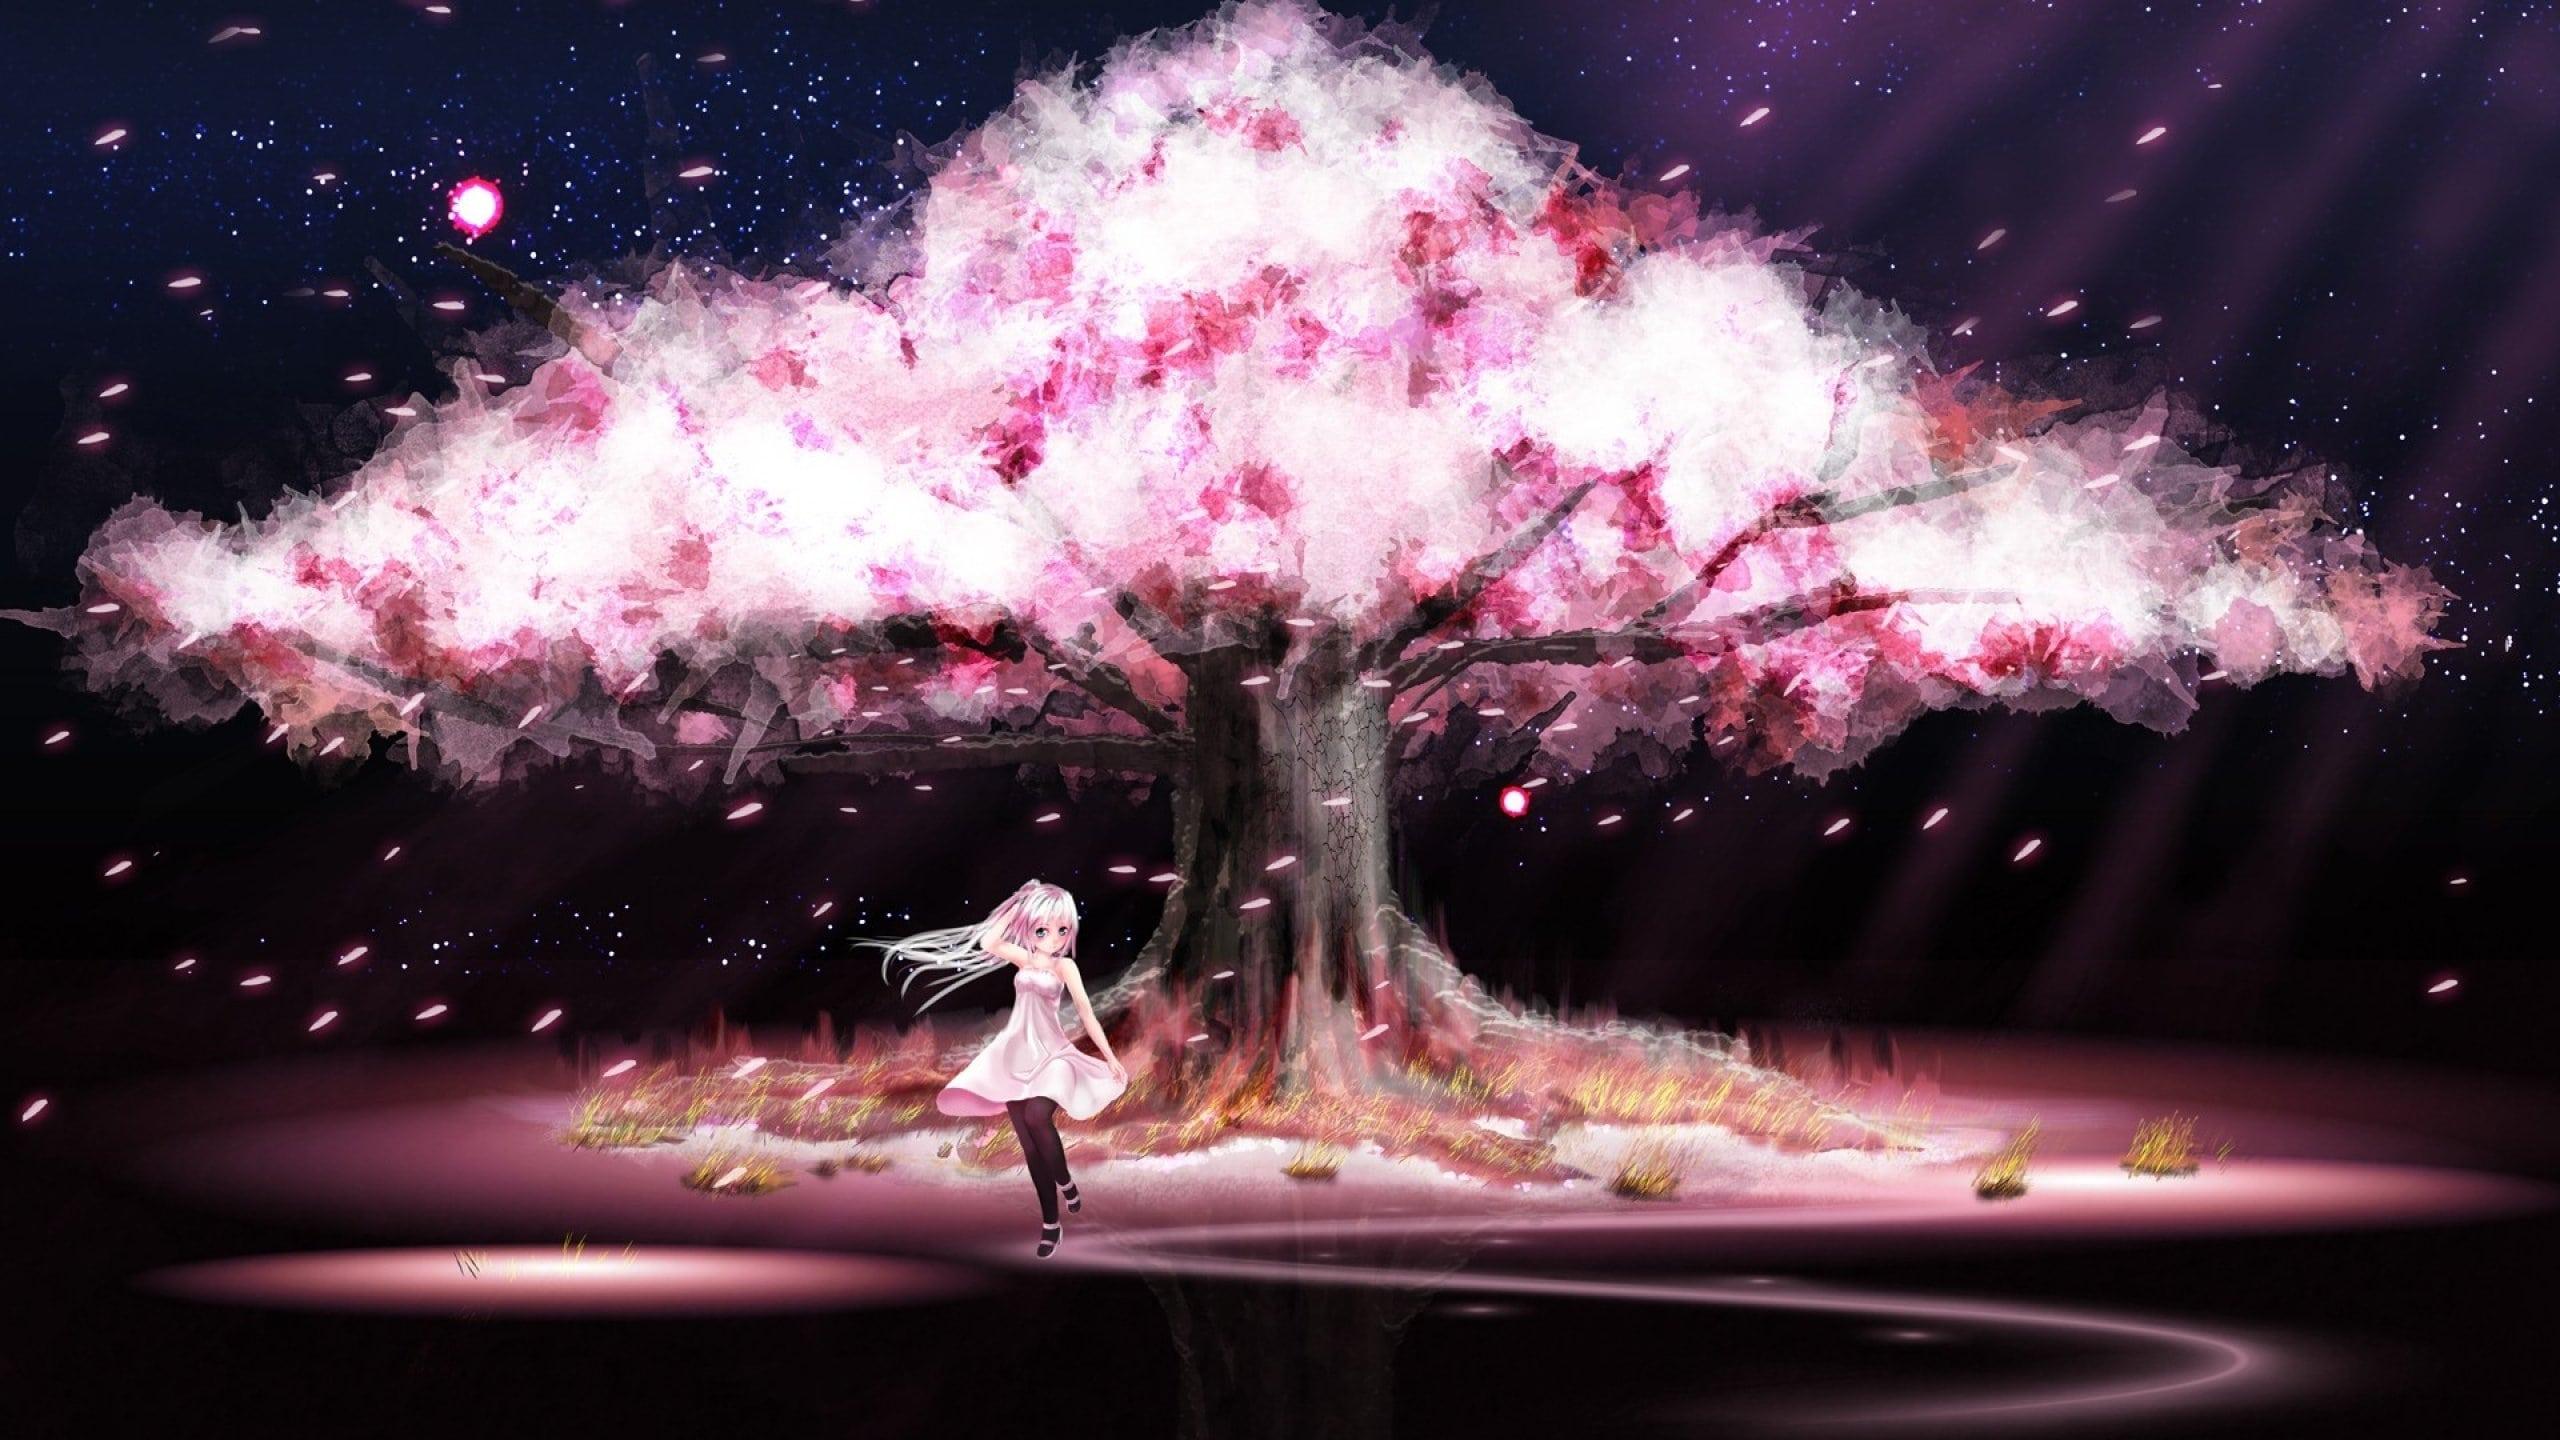 Anime Sakura Blossoms Cherry Tree Wallpaper and Free Stock